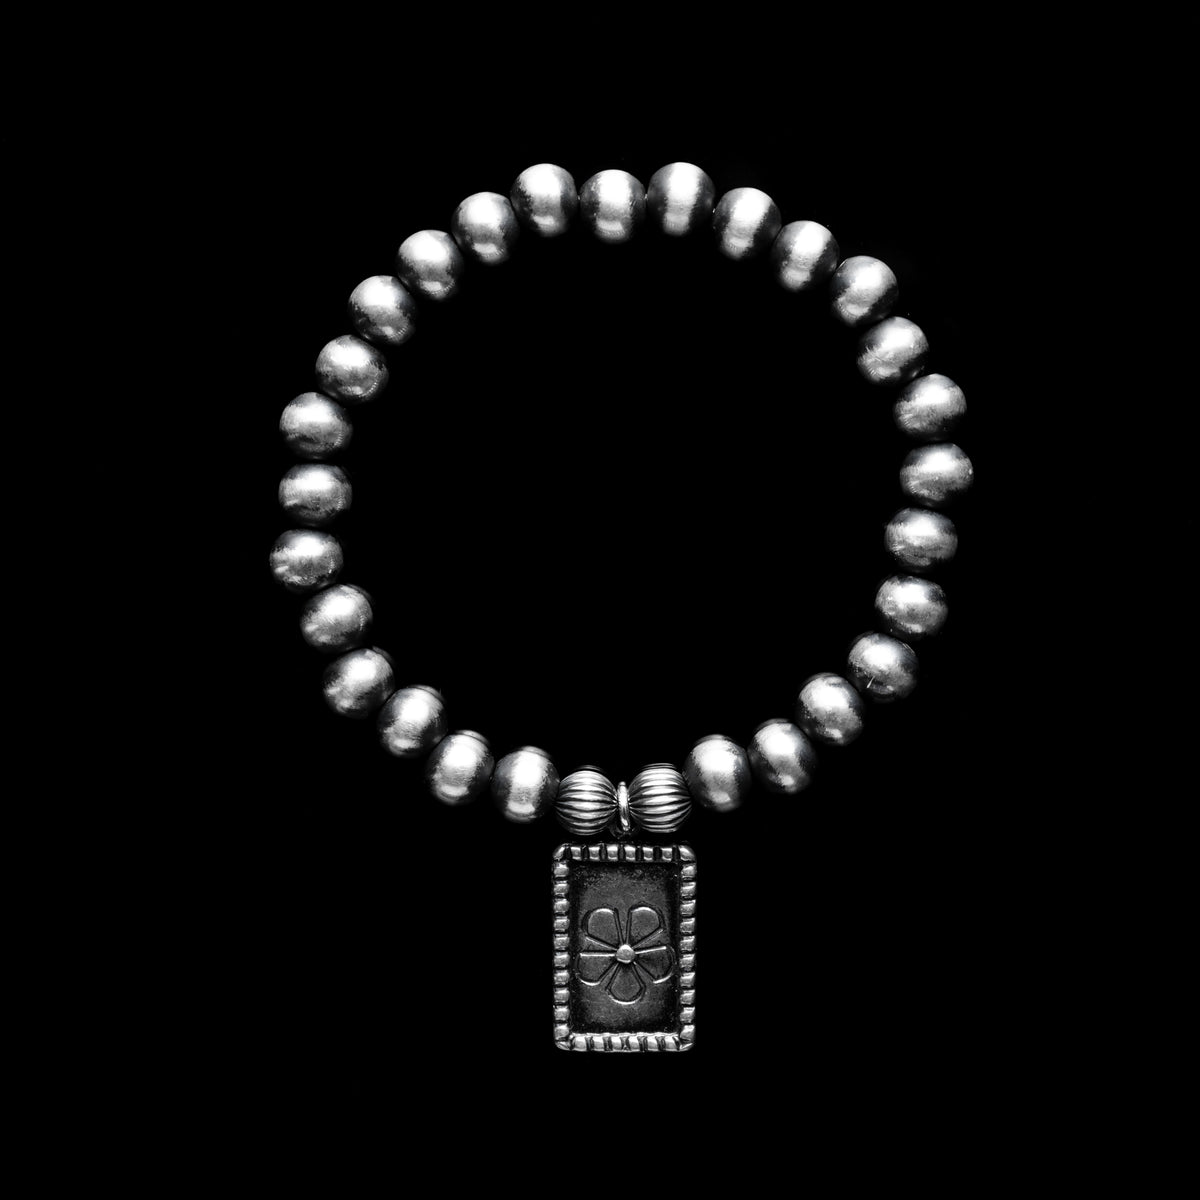 7mm Santa Fe Pearl Stretch Bracelet with Flower Charm